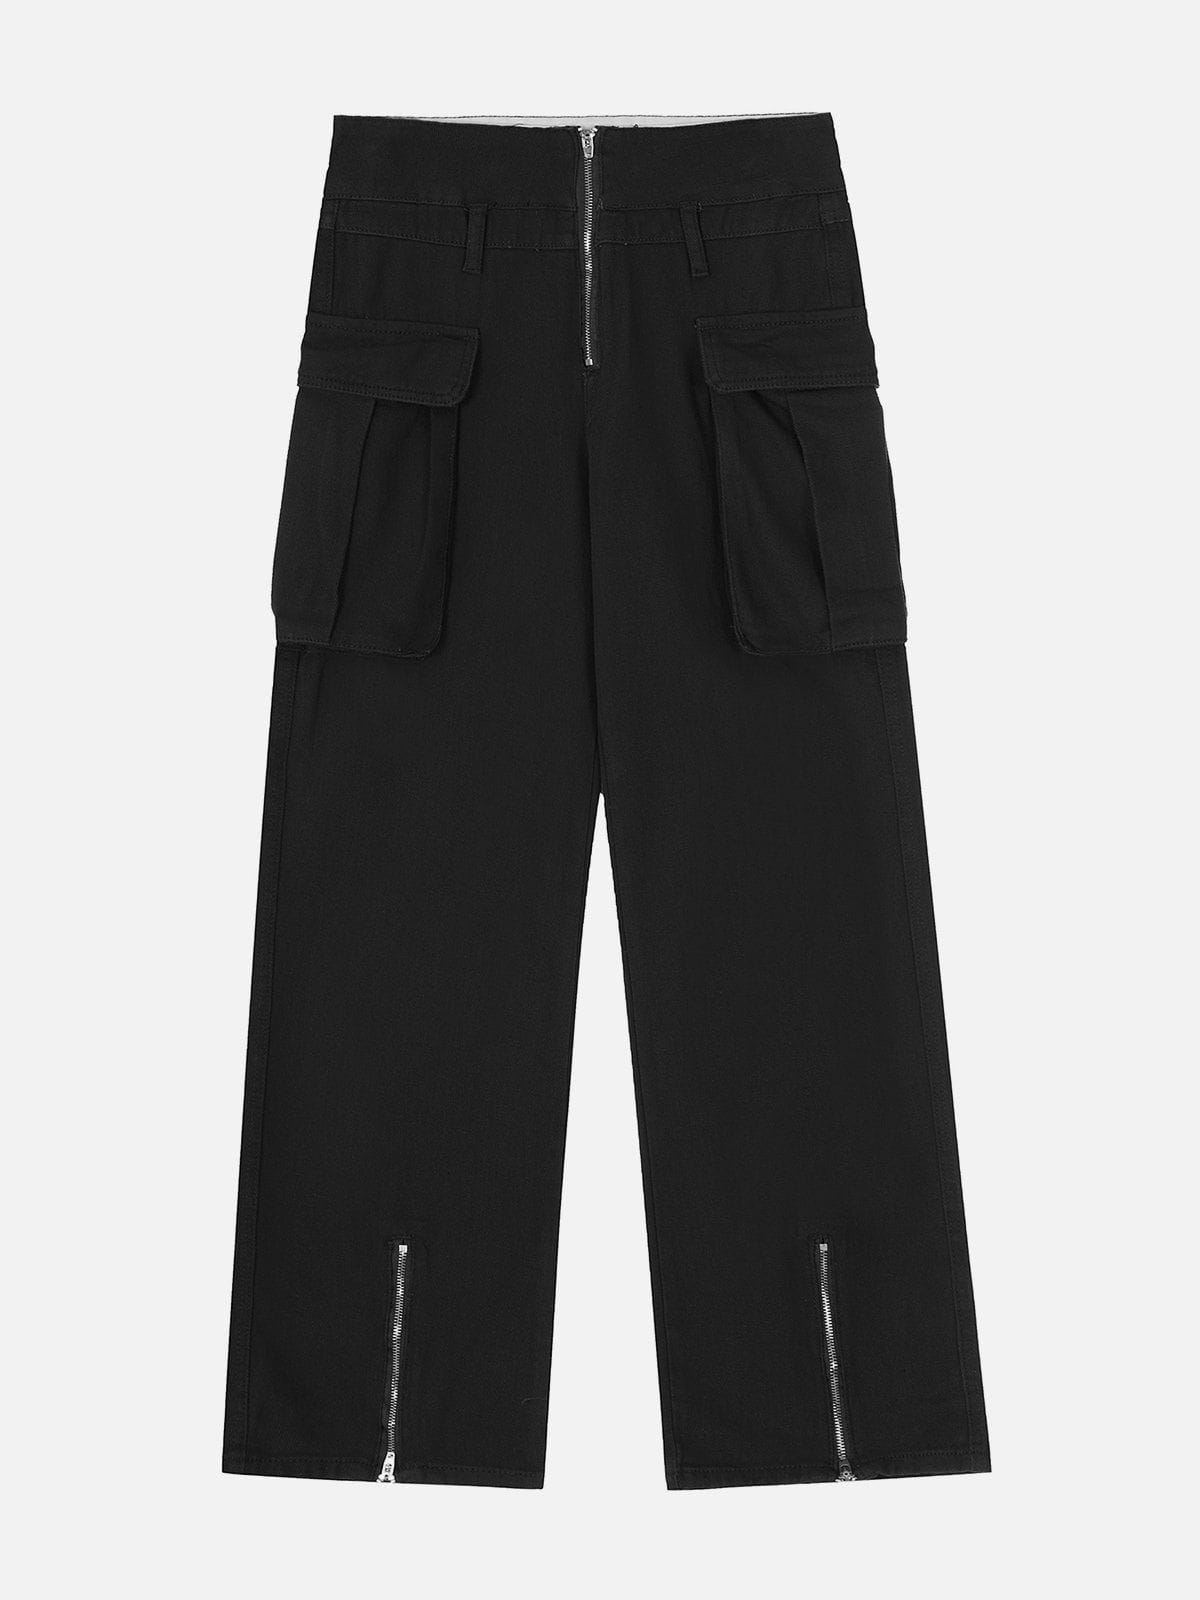 Majesda® - ZIP UP Cargo Pants outfit ideas streetwear fashion